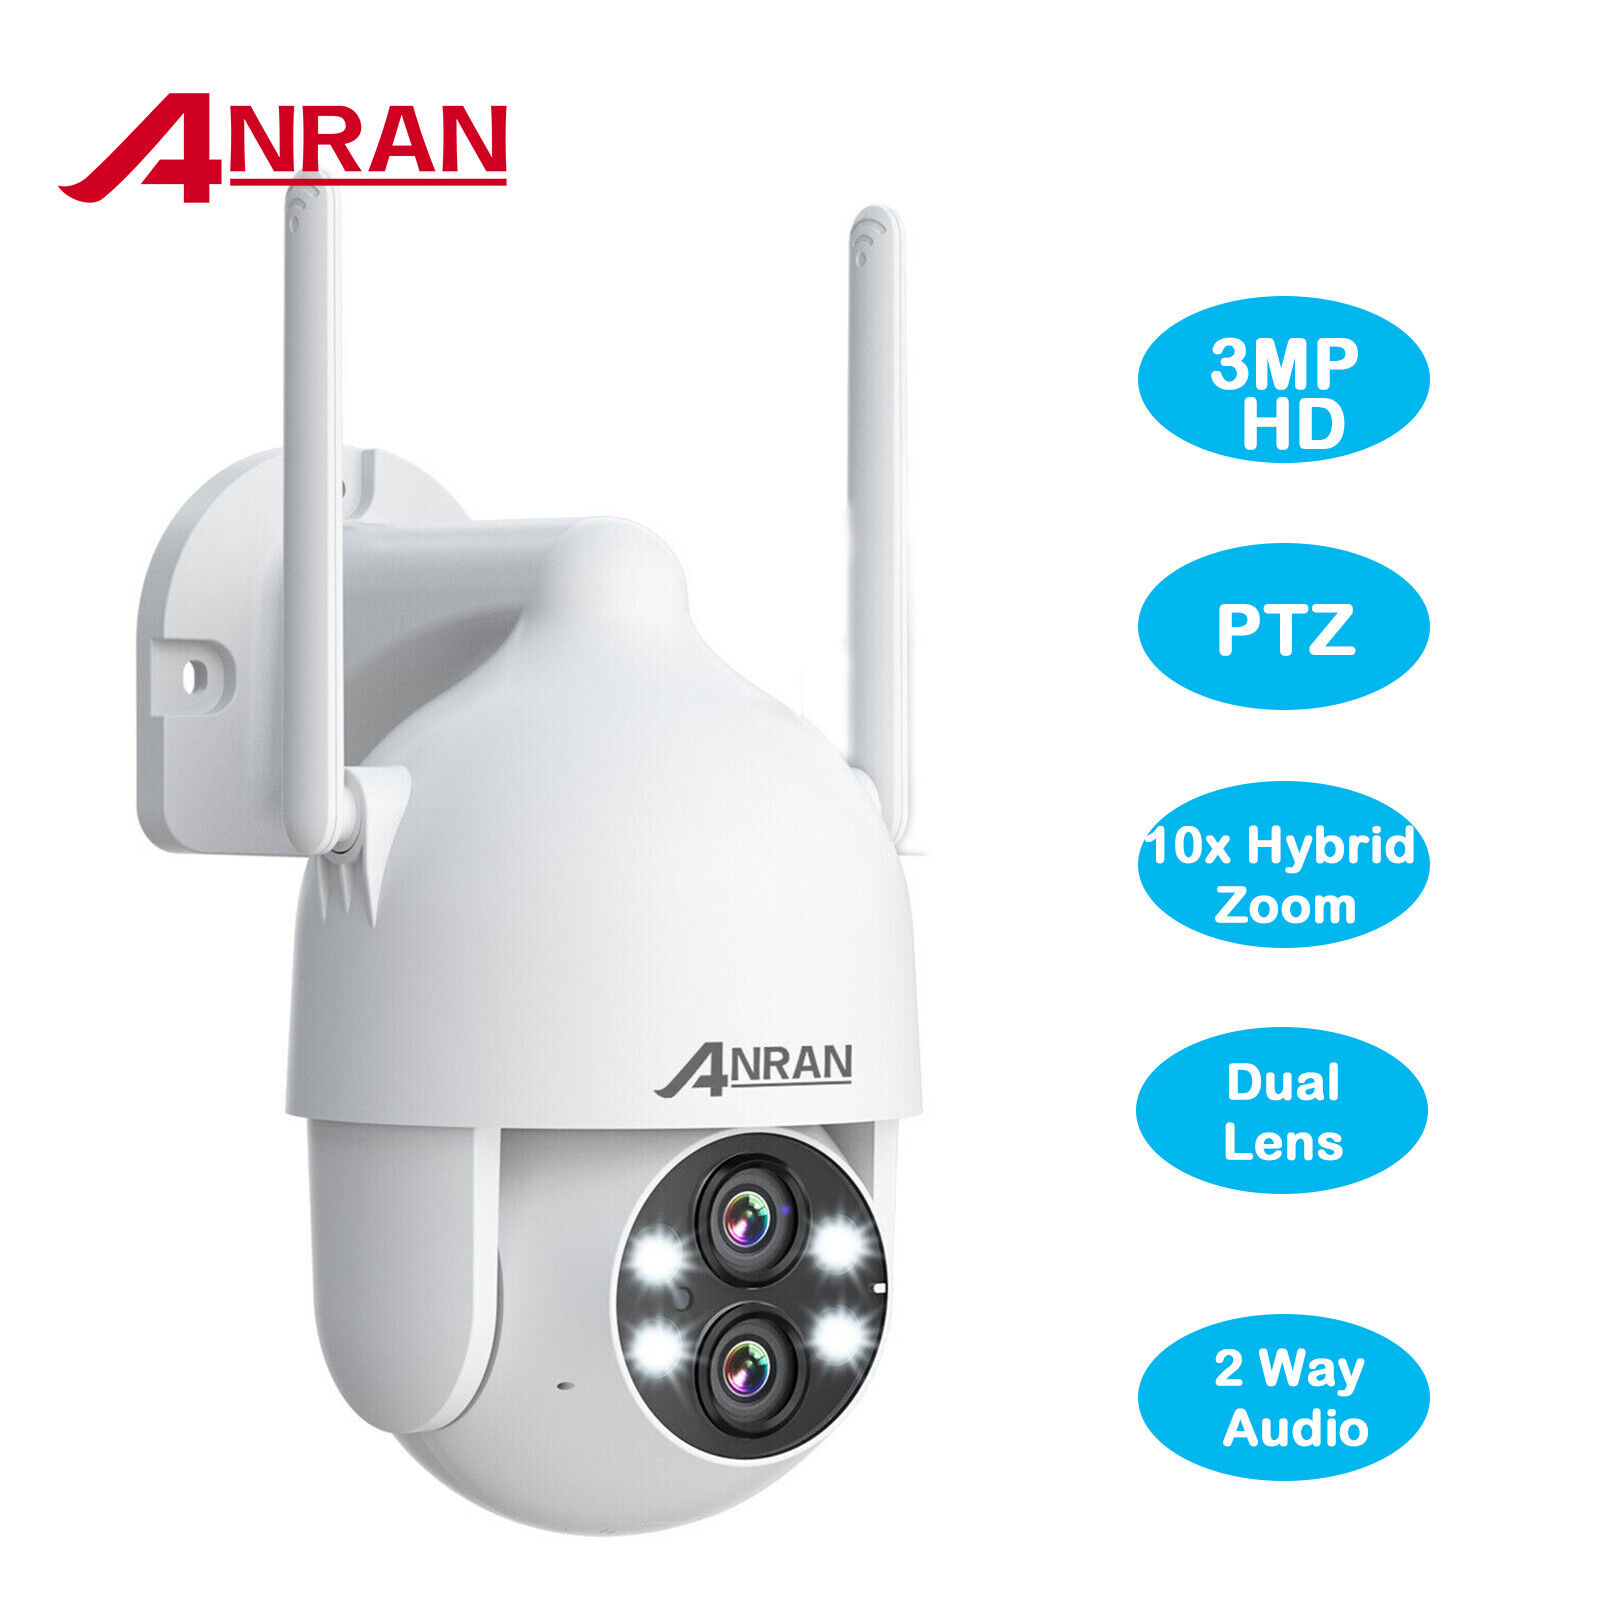 ANRAN Home Security Camera Wireless WiFi Camera Surveillance 3MP HD Night Vision